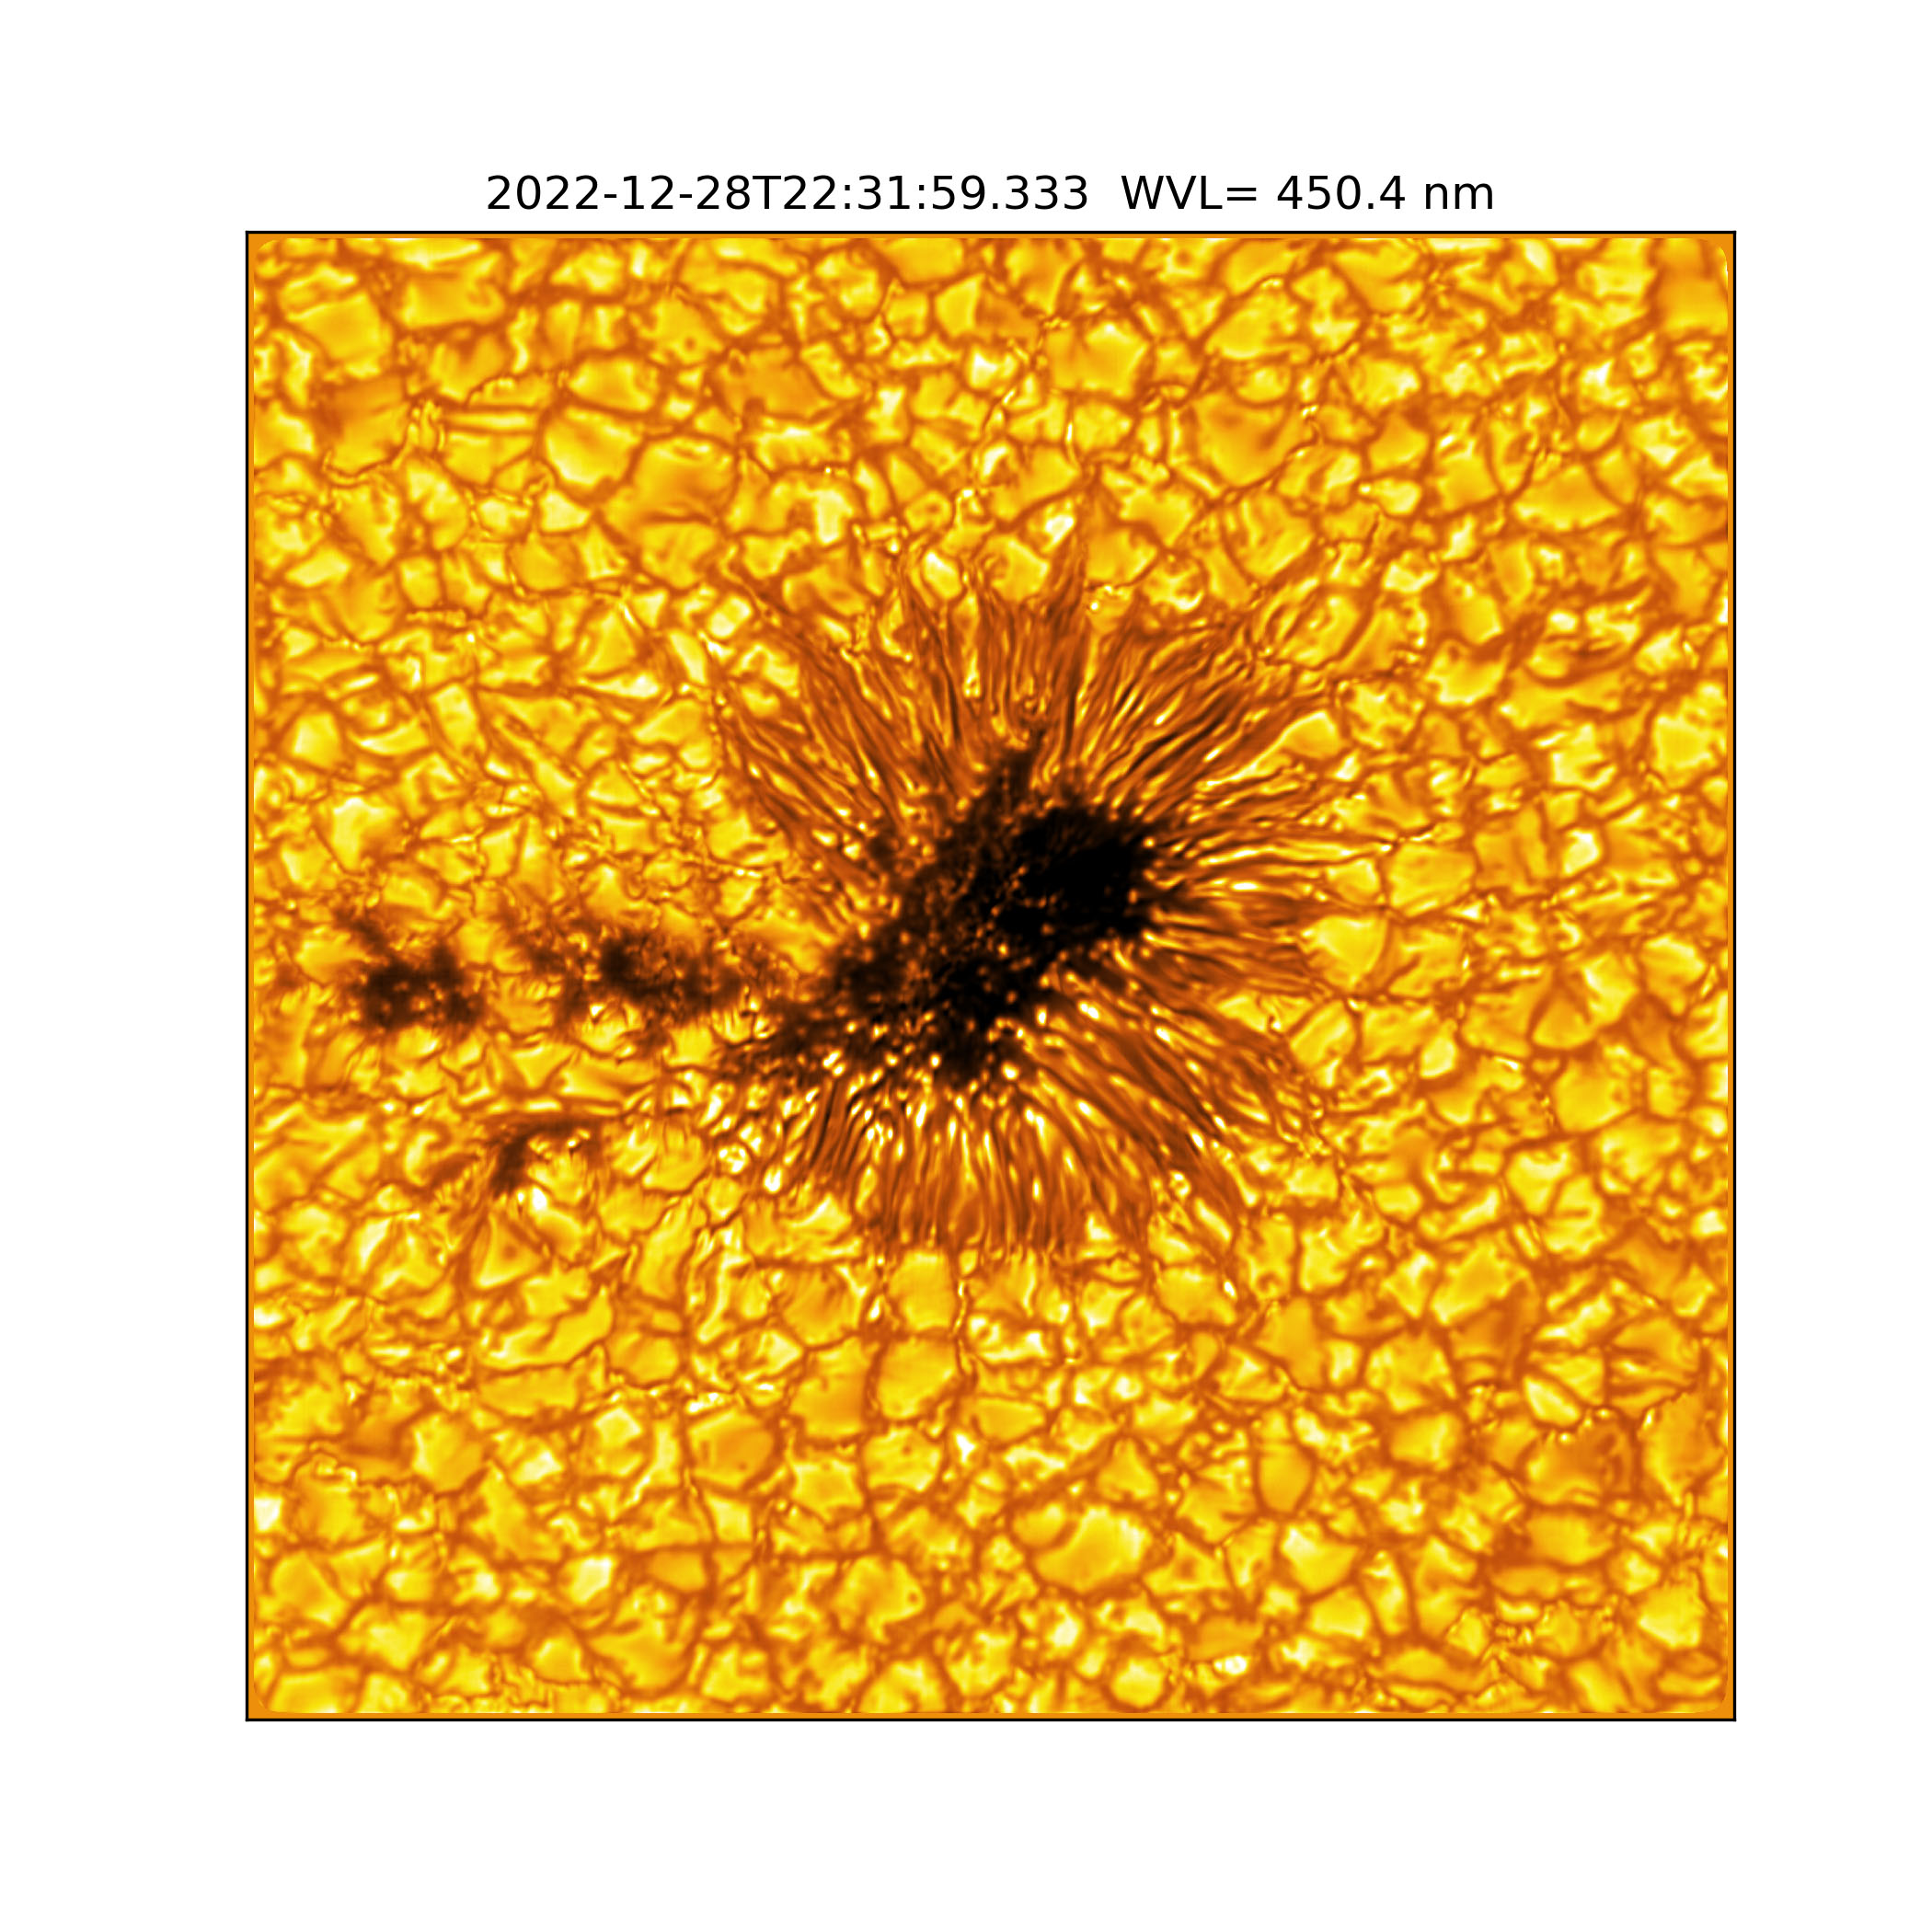 sol nuevas imagenes telescopio inouye atst ics vbiblue dc  vcc xfer 107703 compressed8